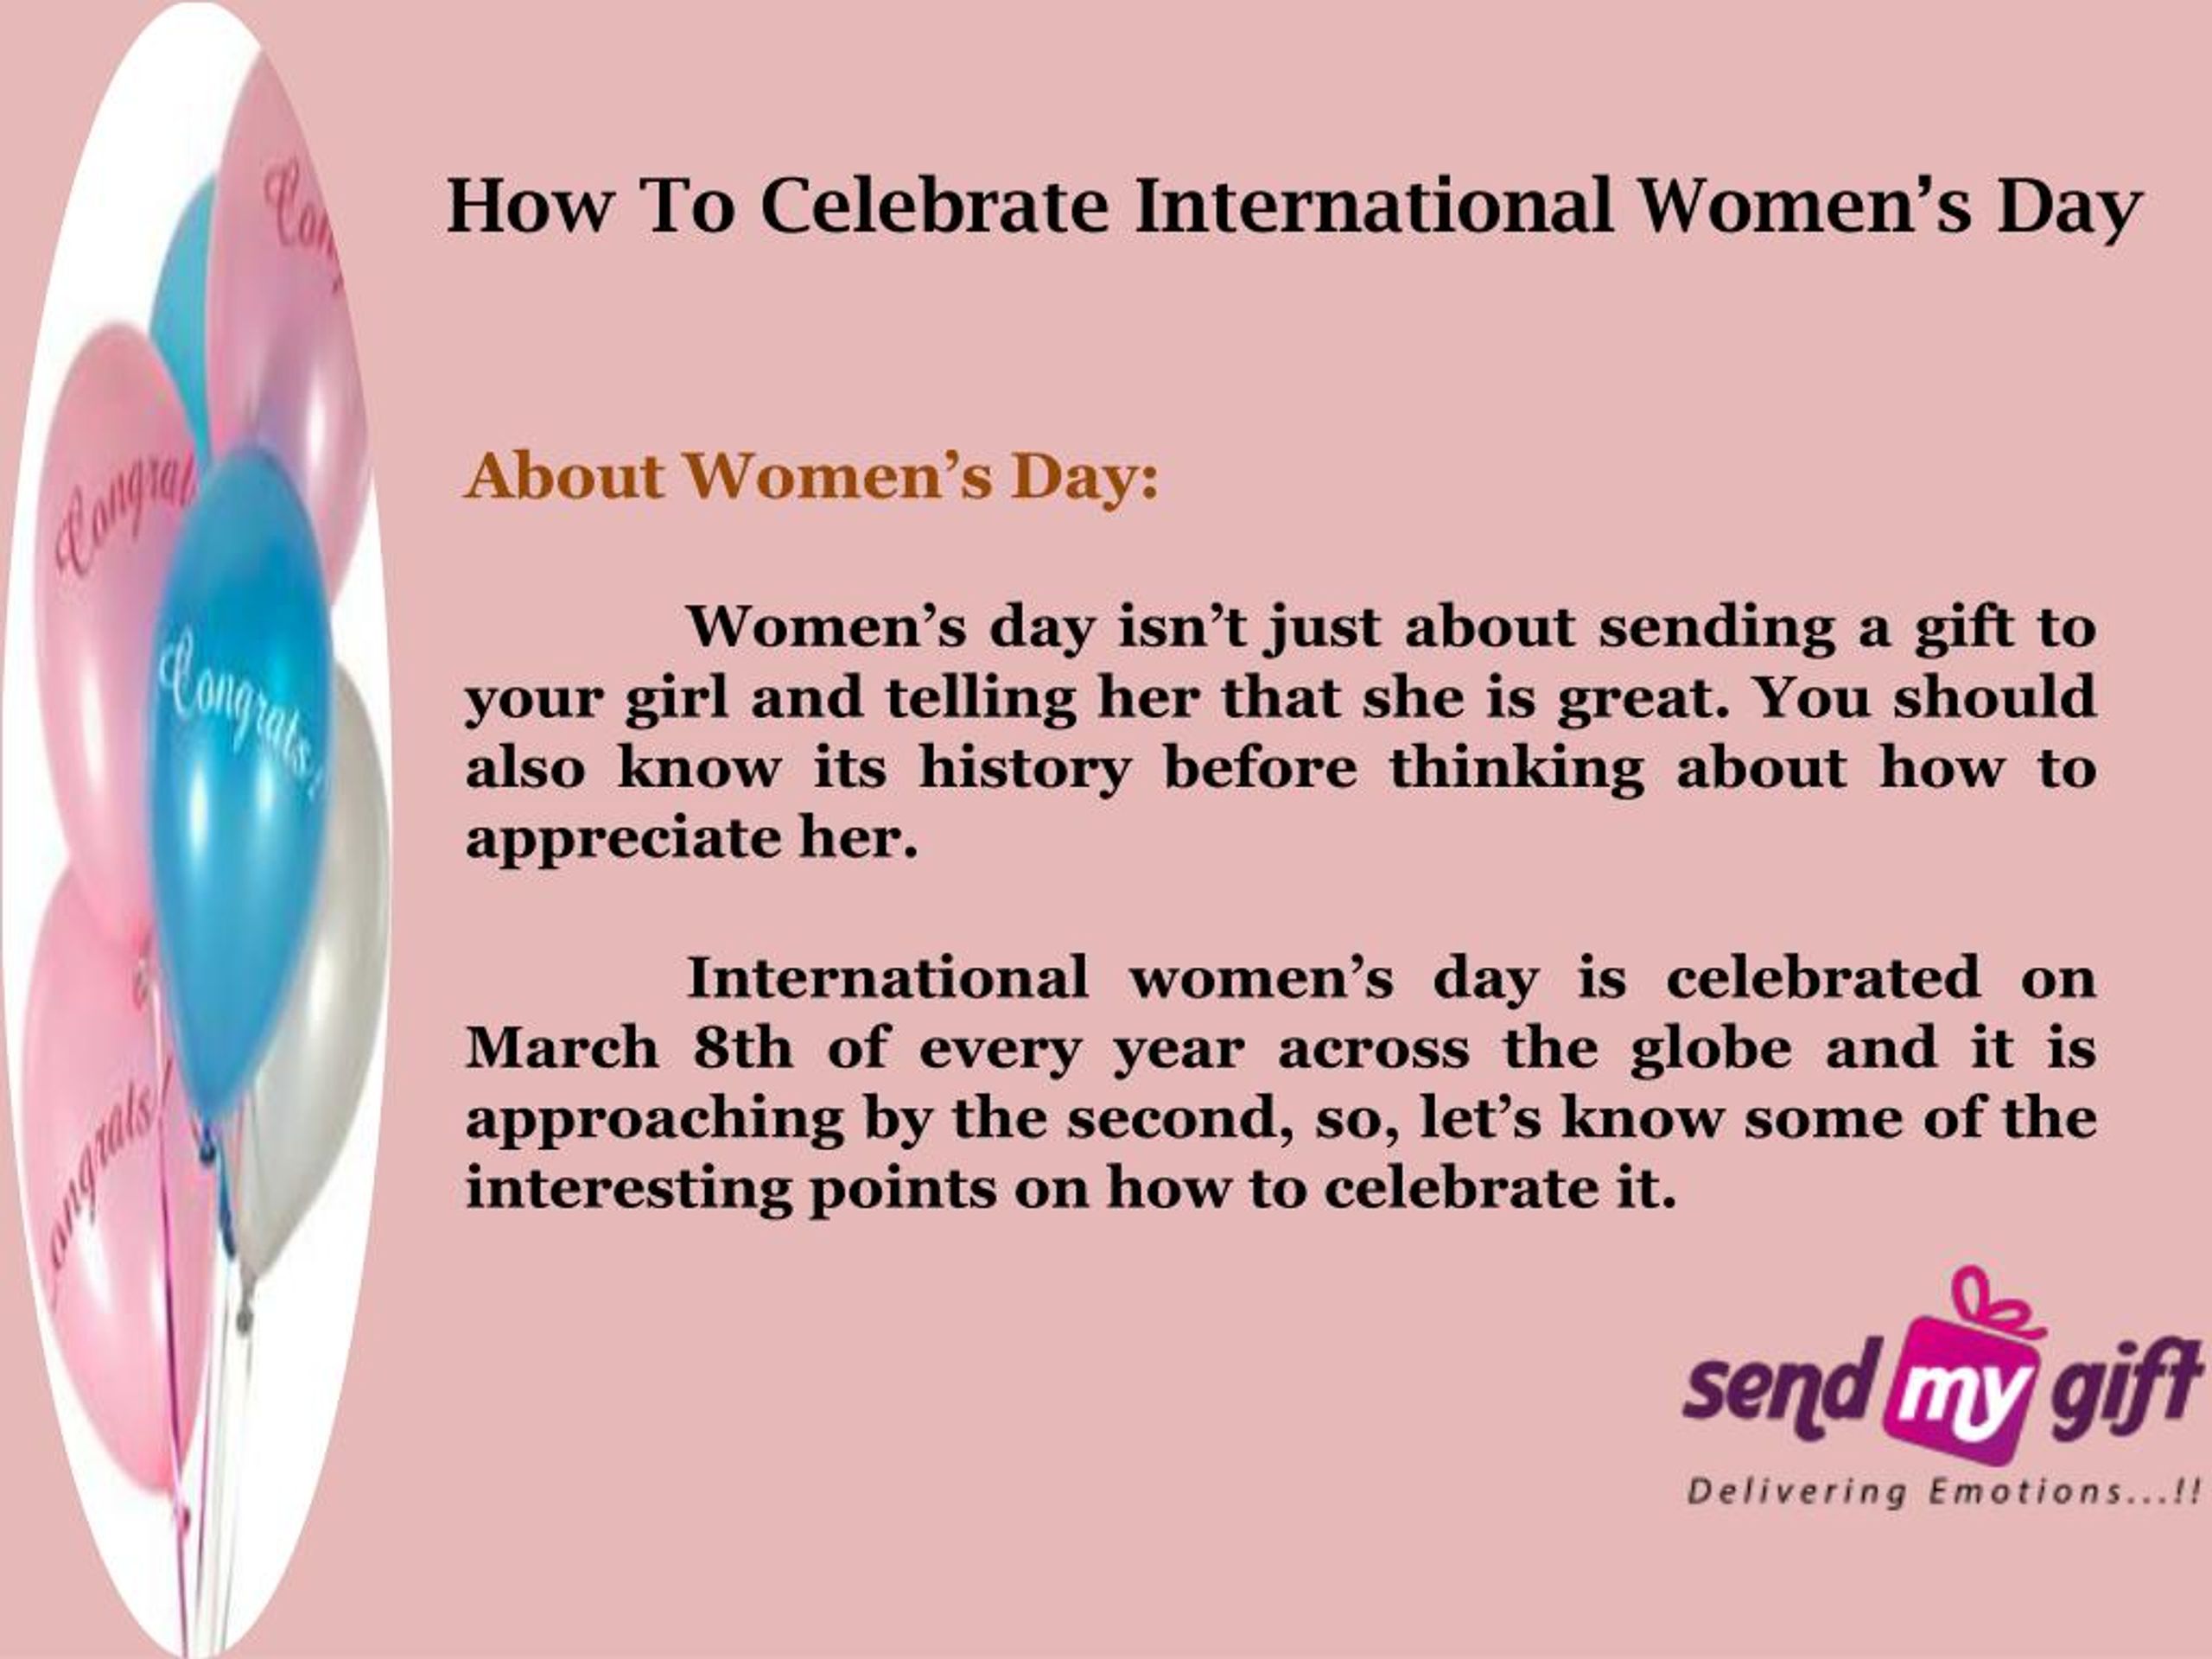 powerpoint presentation on women's day